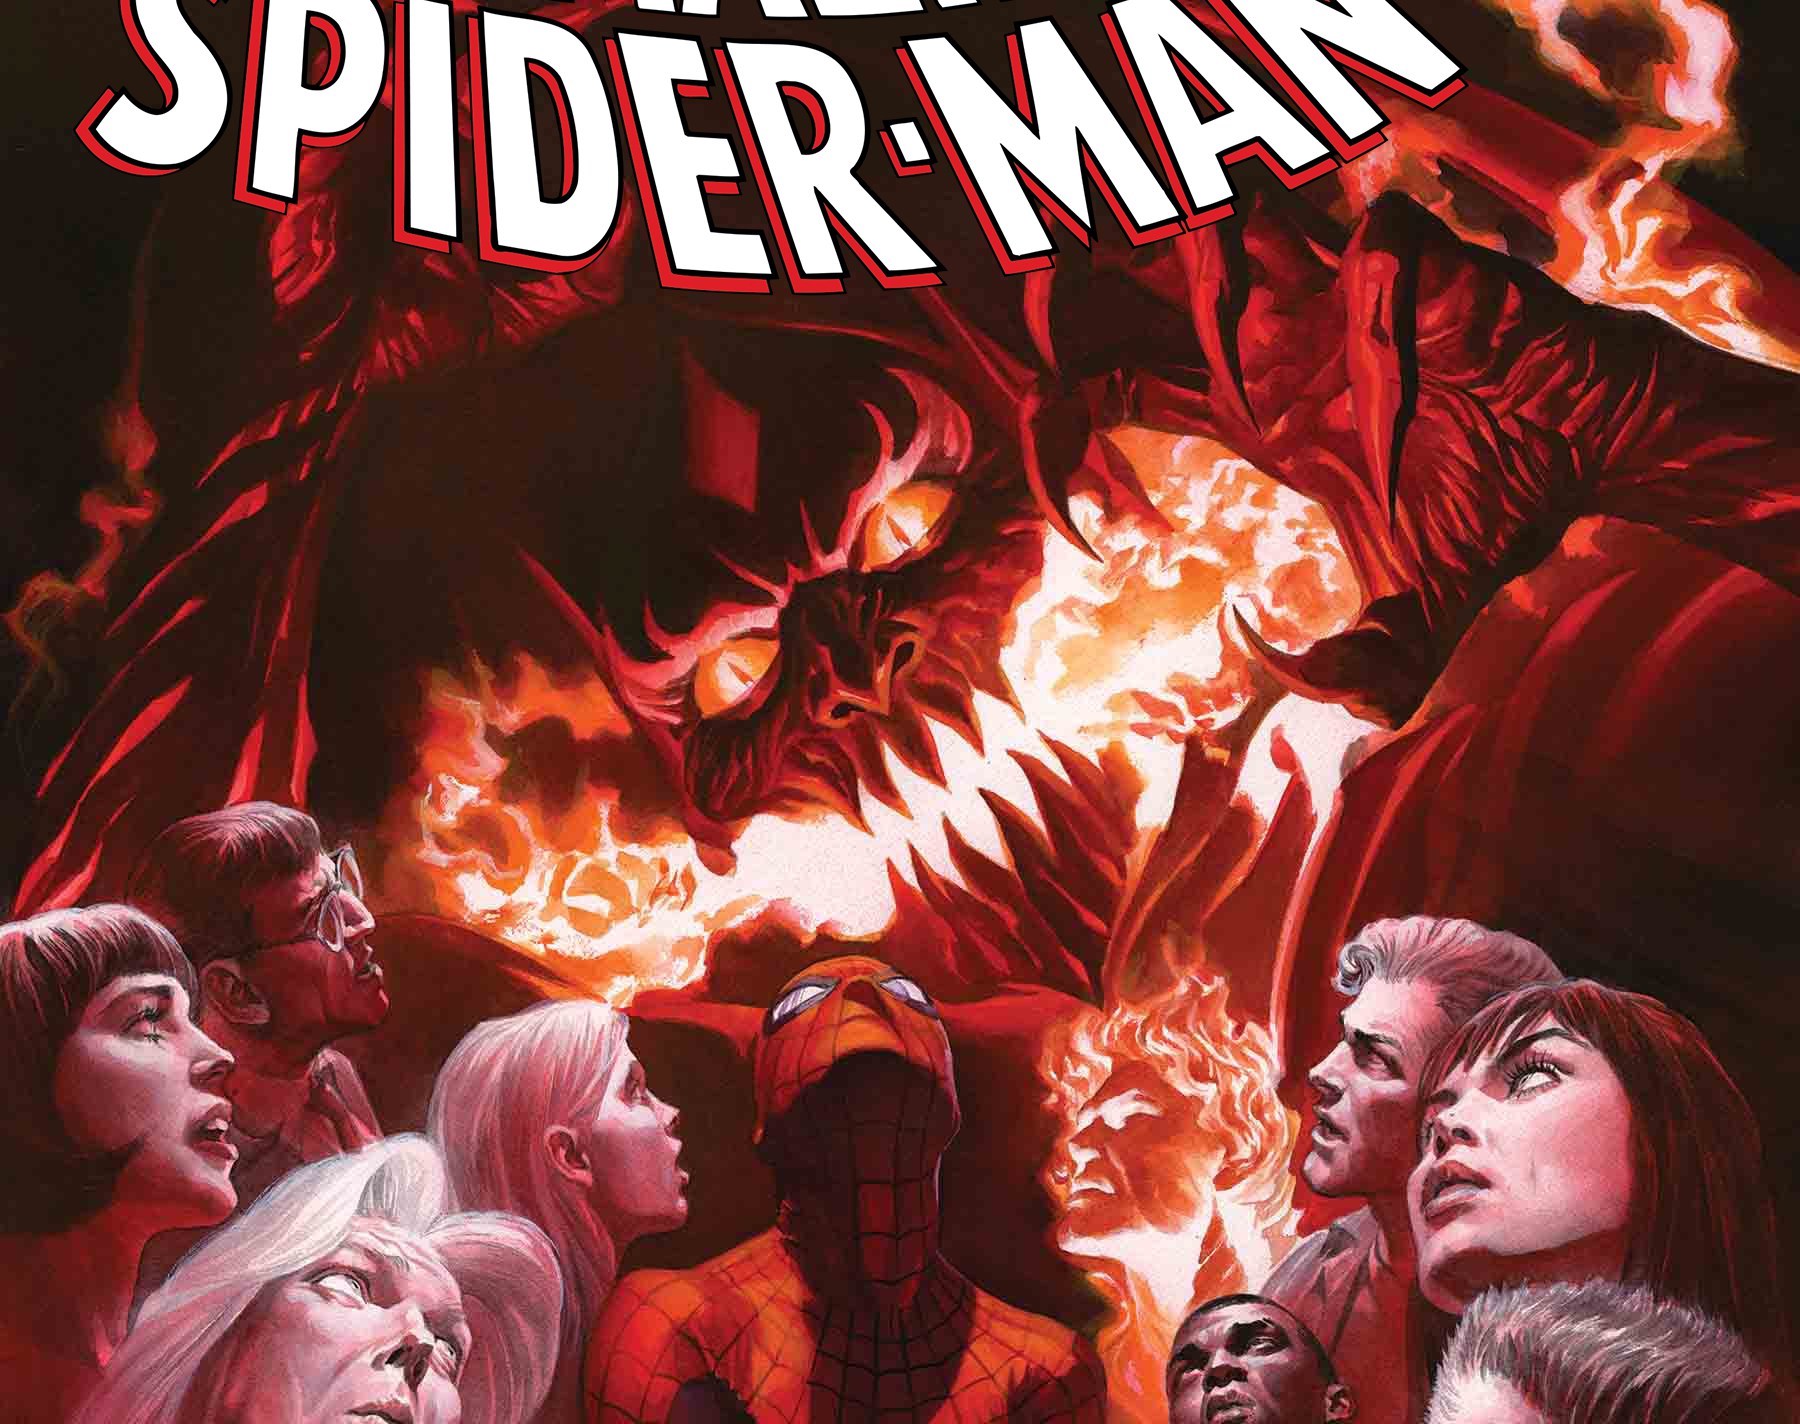 Amazing Spider-Man #797 spoilers: the Green Goblin has never been so dangerous